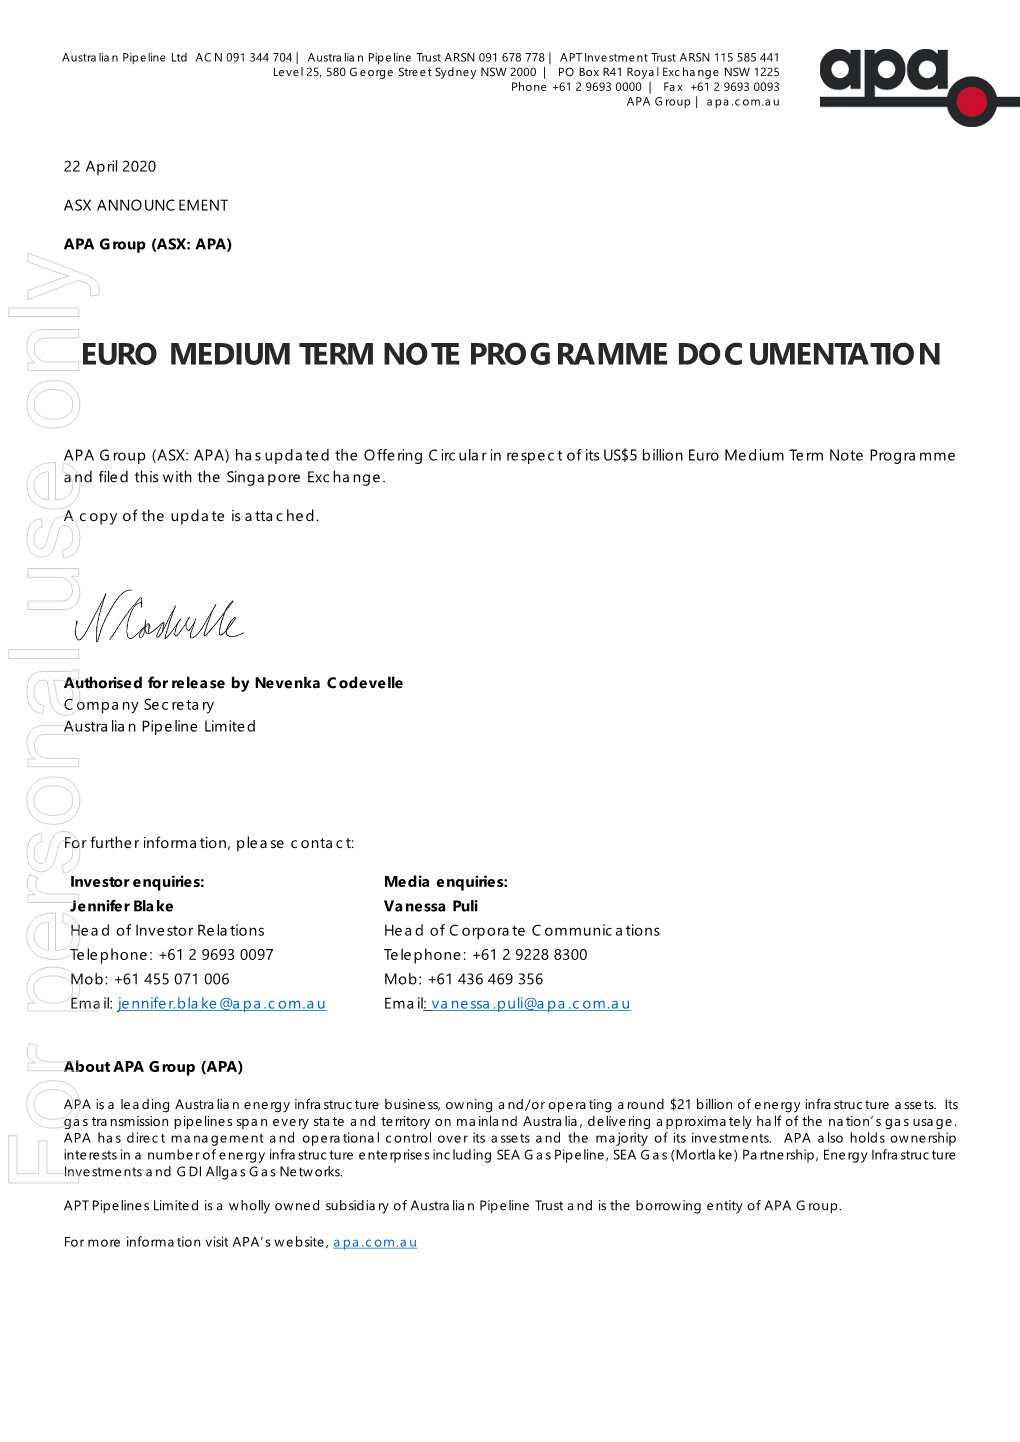 Euro Medium Term Note Programme Documentation